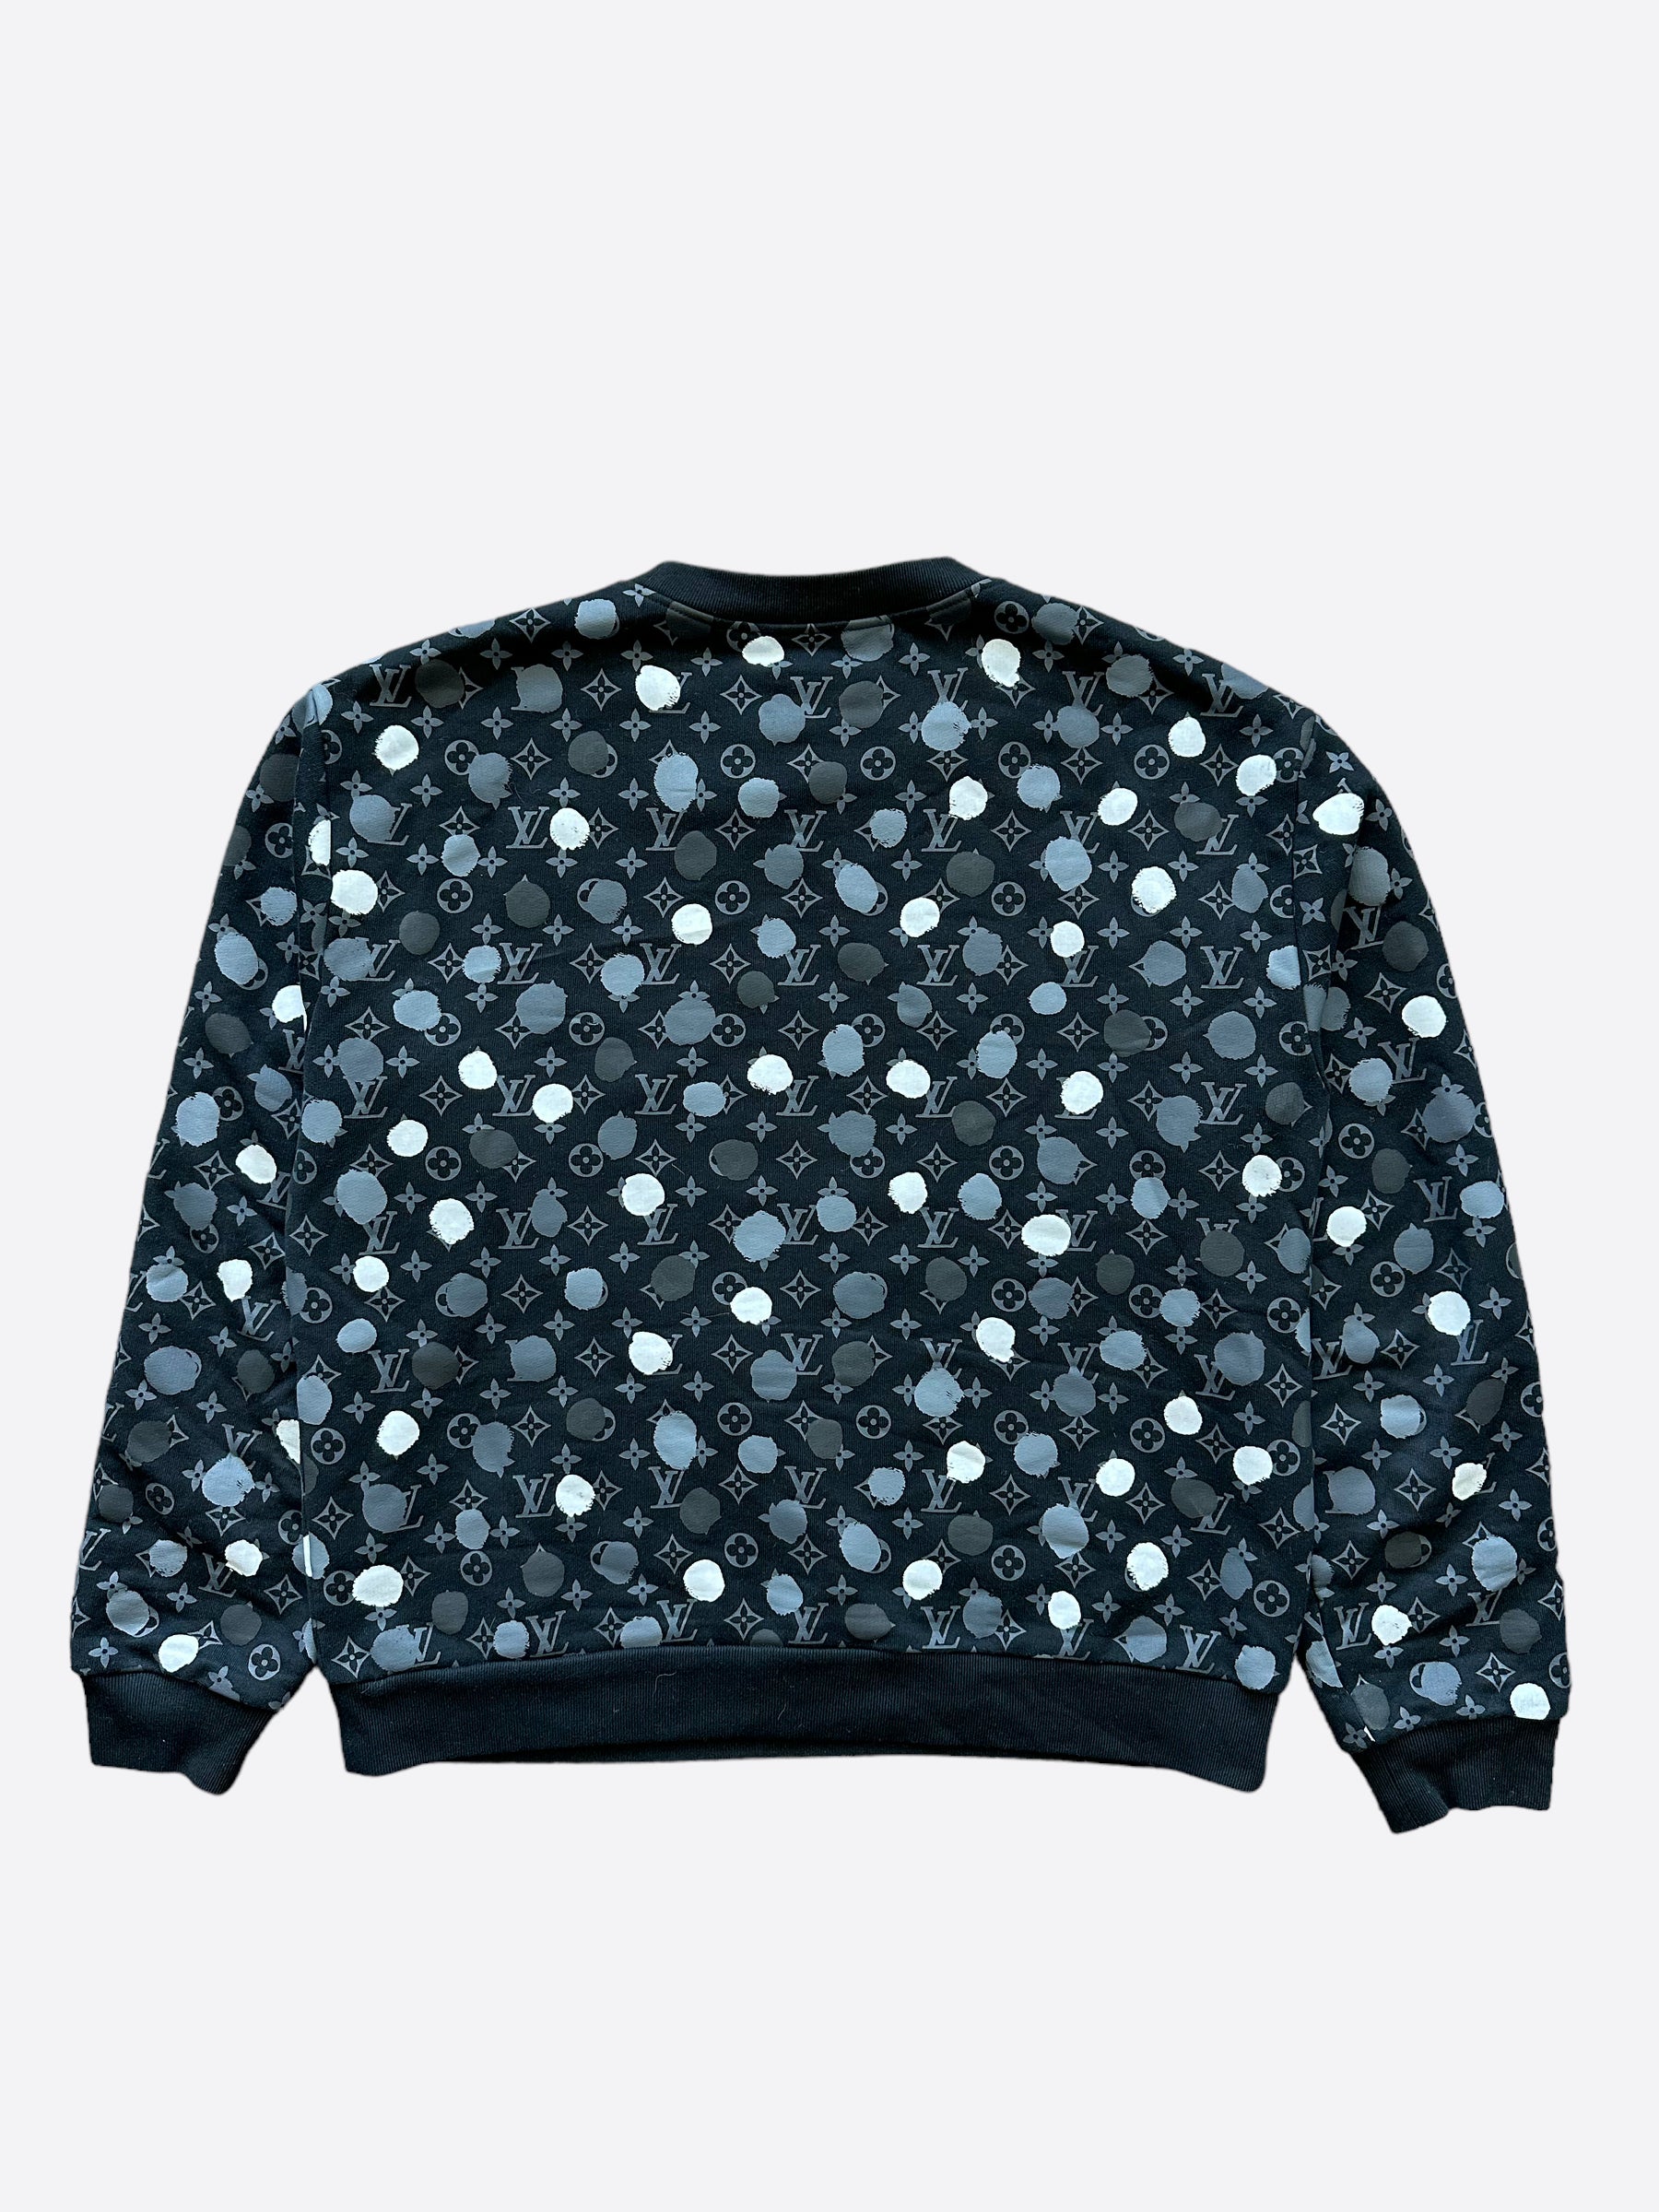 Louis Vuitton Yayoi Kusama Polka Dot Monogram Sweater